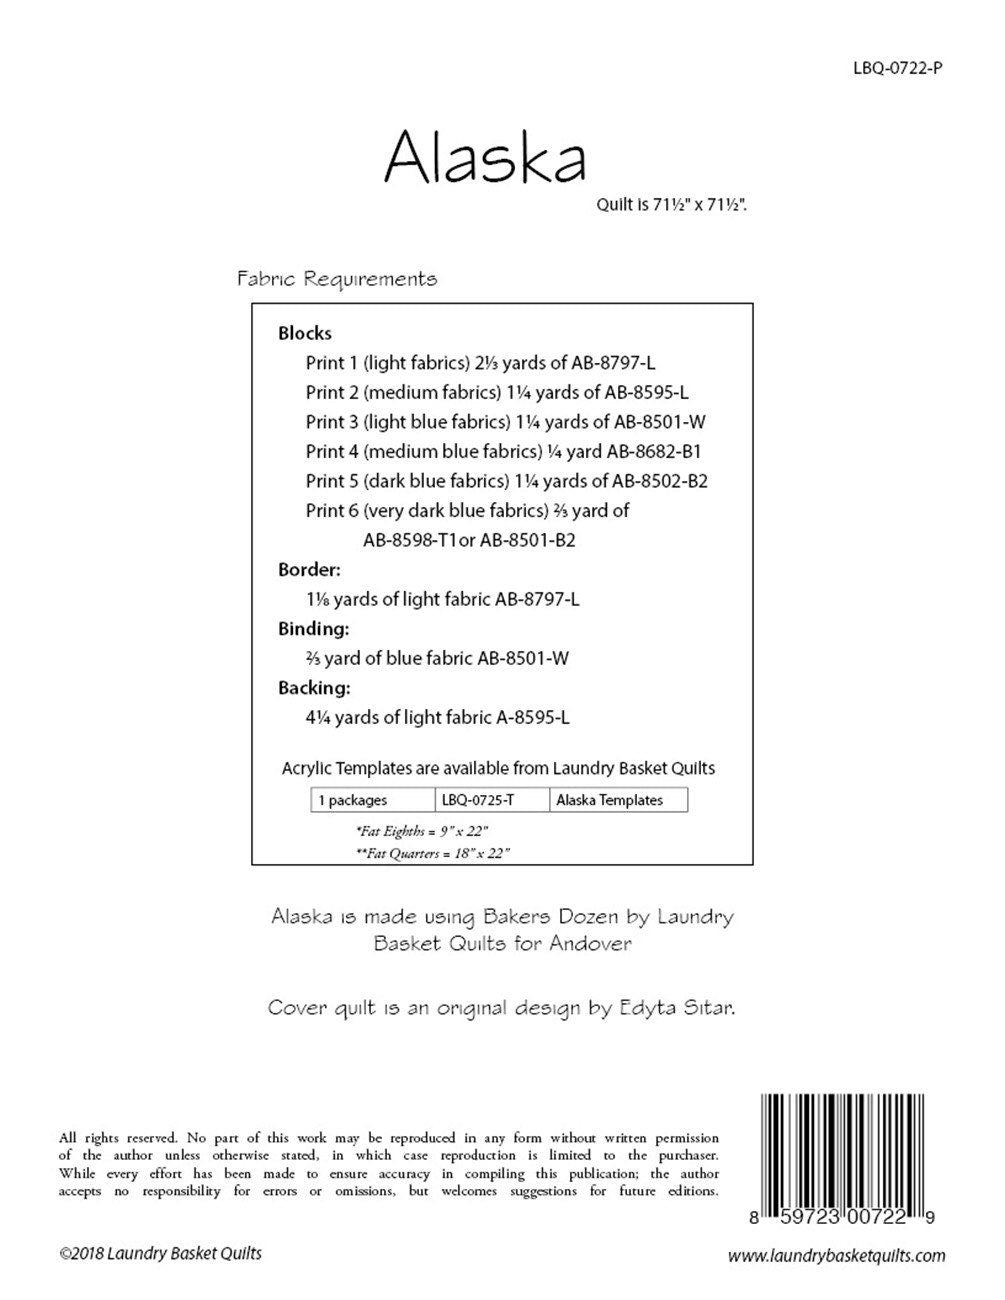 Alaska Pattern 72” x 72” - Laundry Basket Quilts - Edyta Sitar - Optional Acrylic Templates